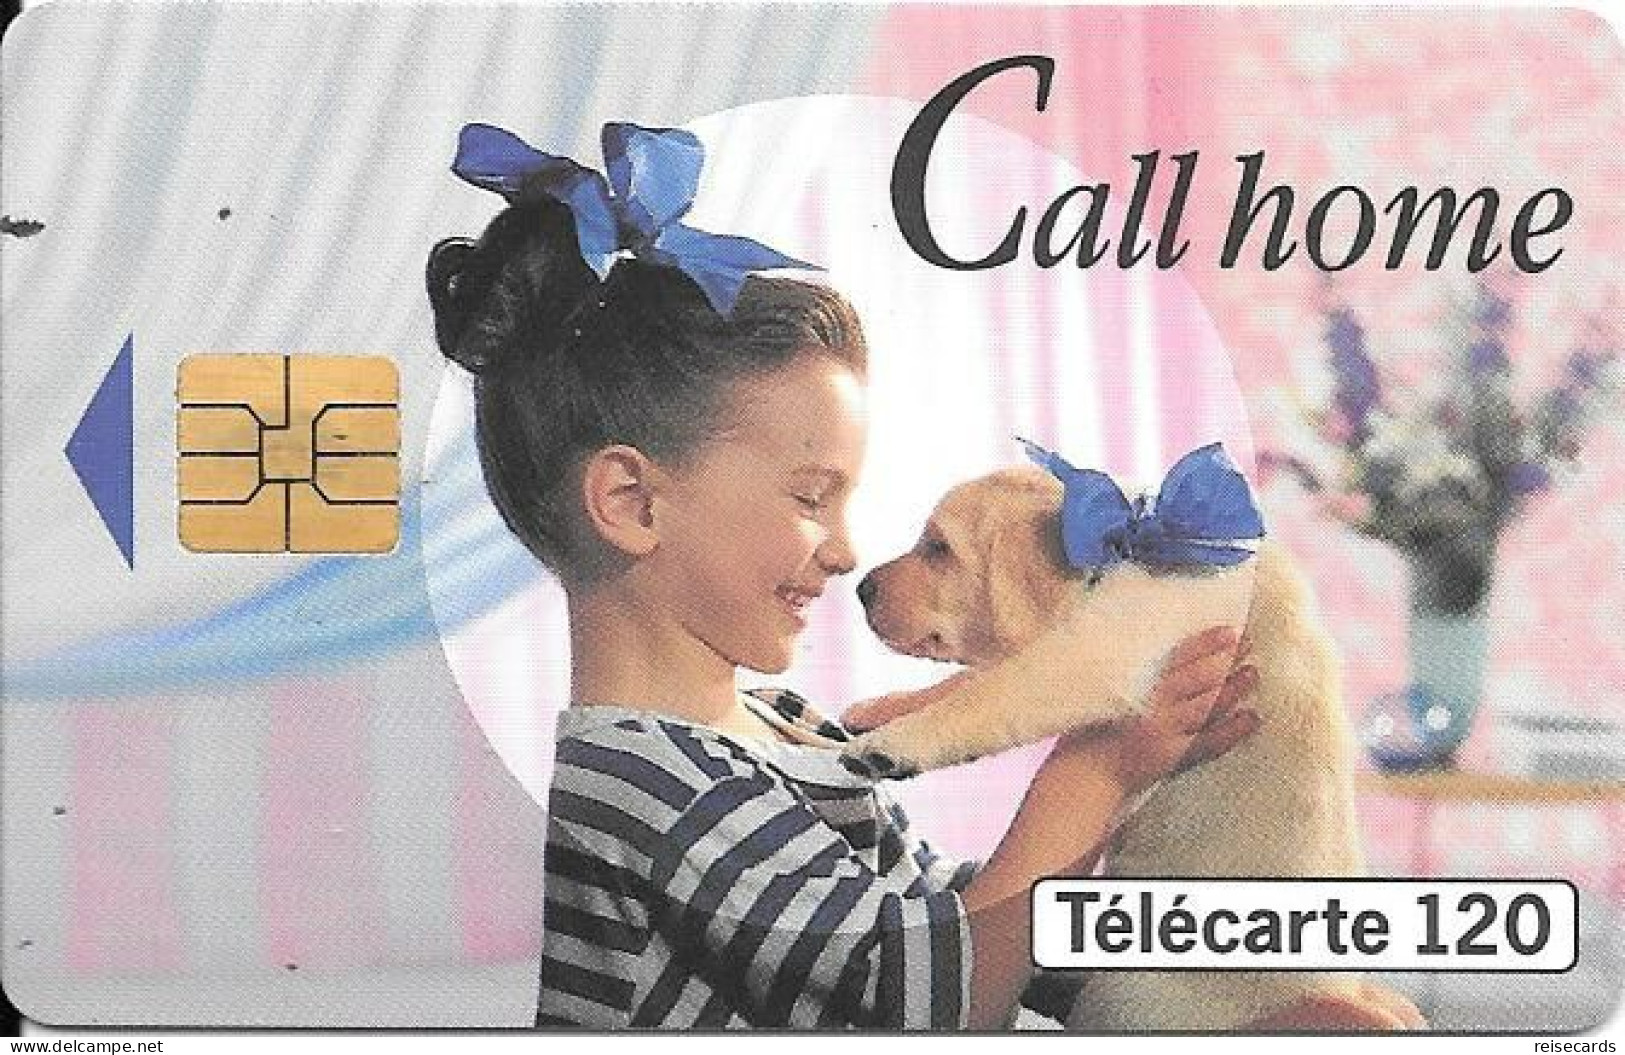 France: France Telecom 05/94 F472 970.1 Call Home - 1994